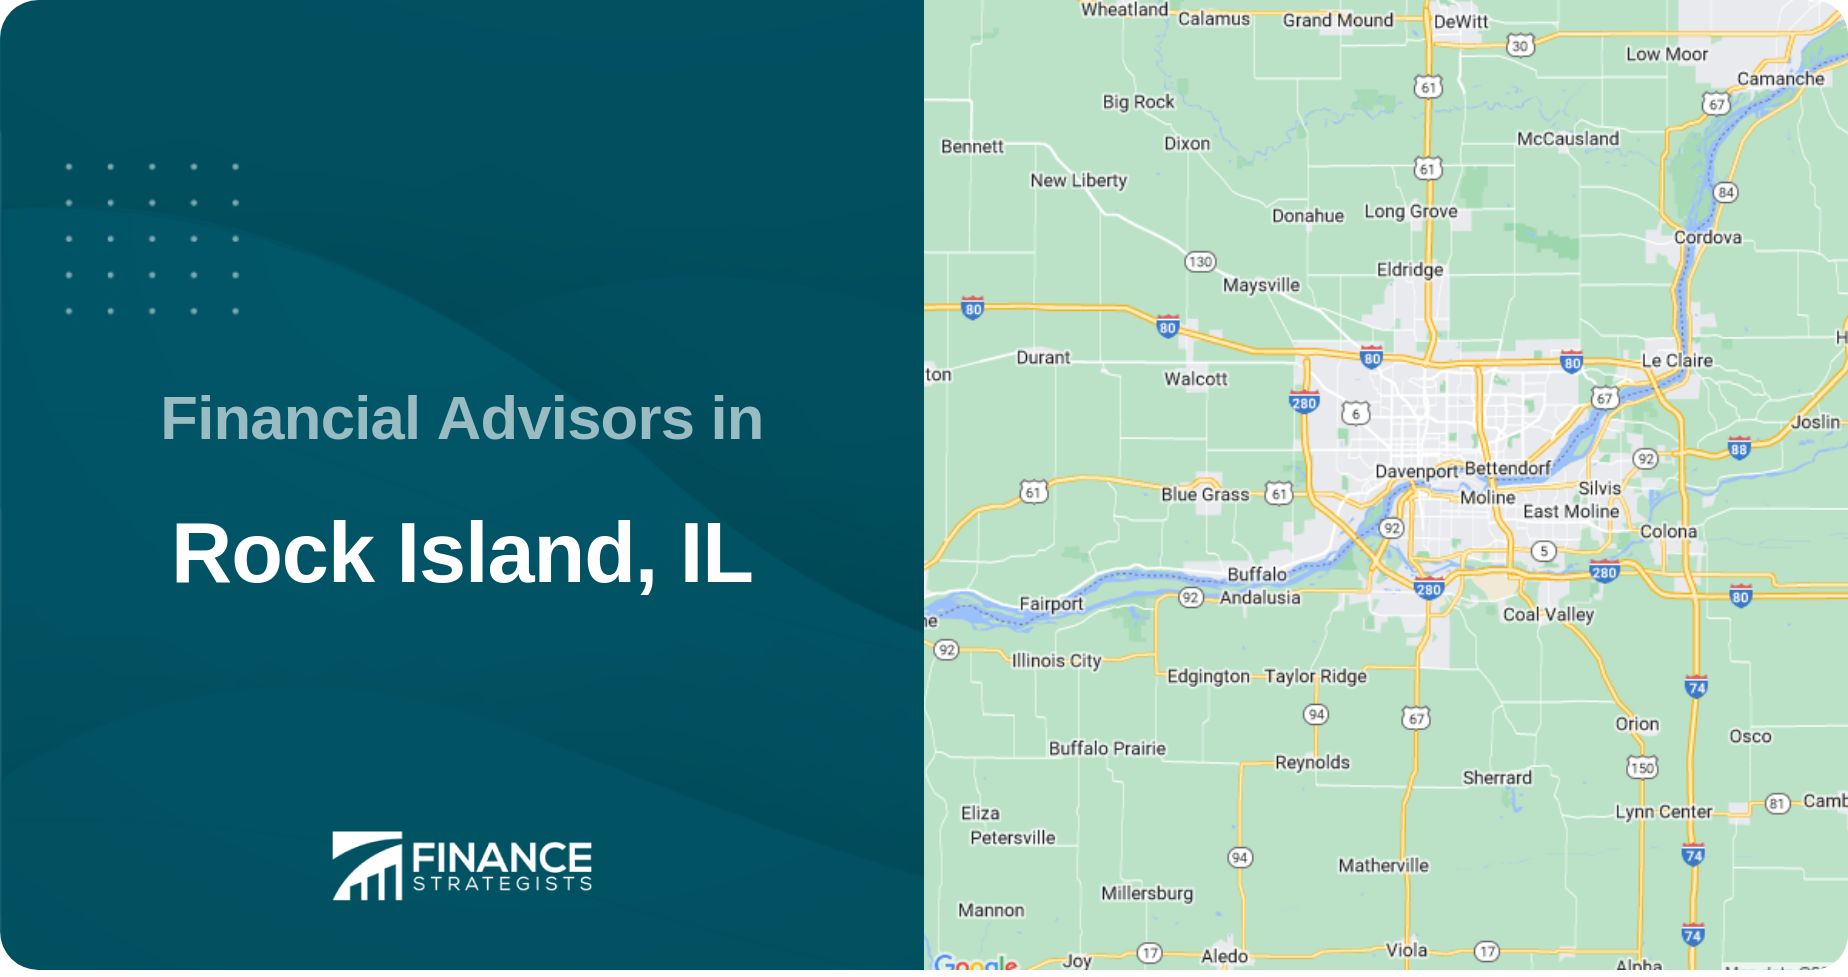 Financial Advisors in Rock Island, IL